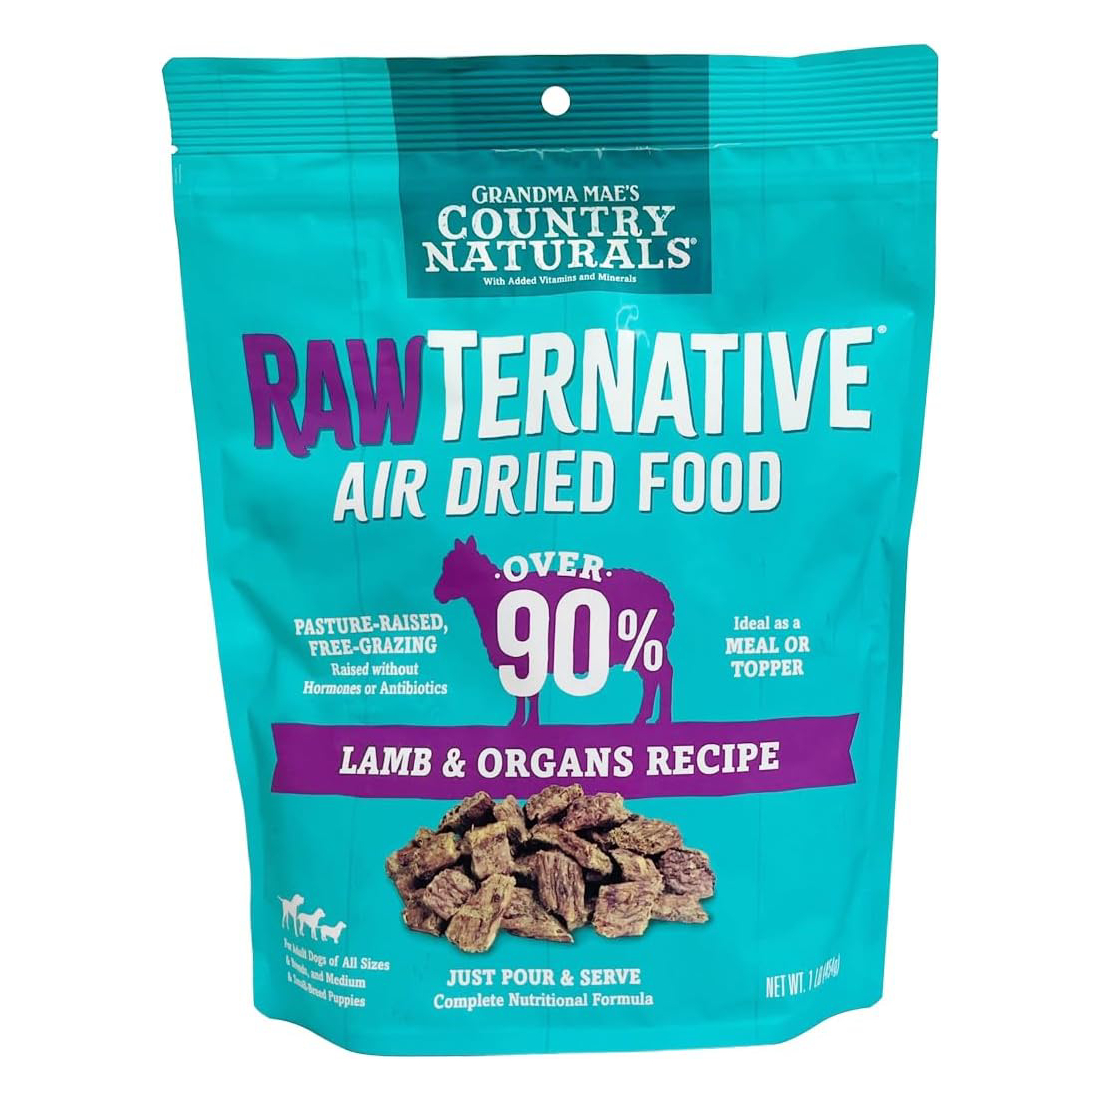 Grandma Mae's Country Naturals RawTernative Air Dried Dog Food